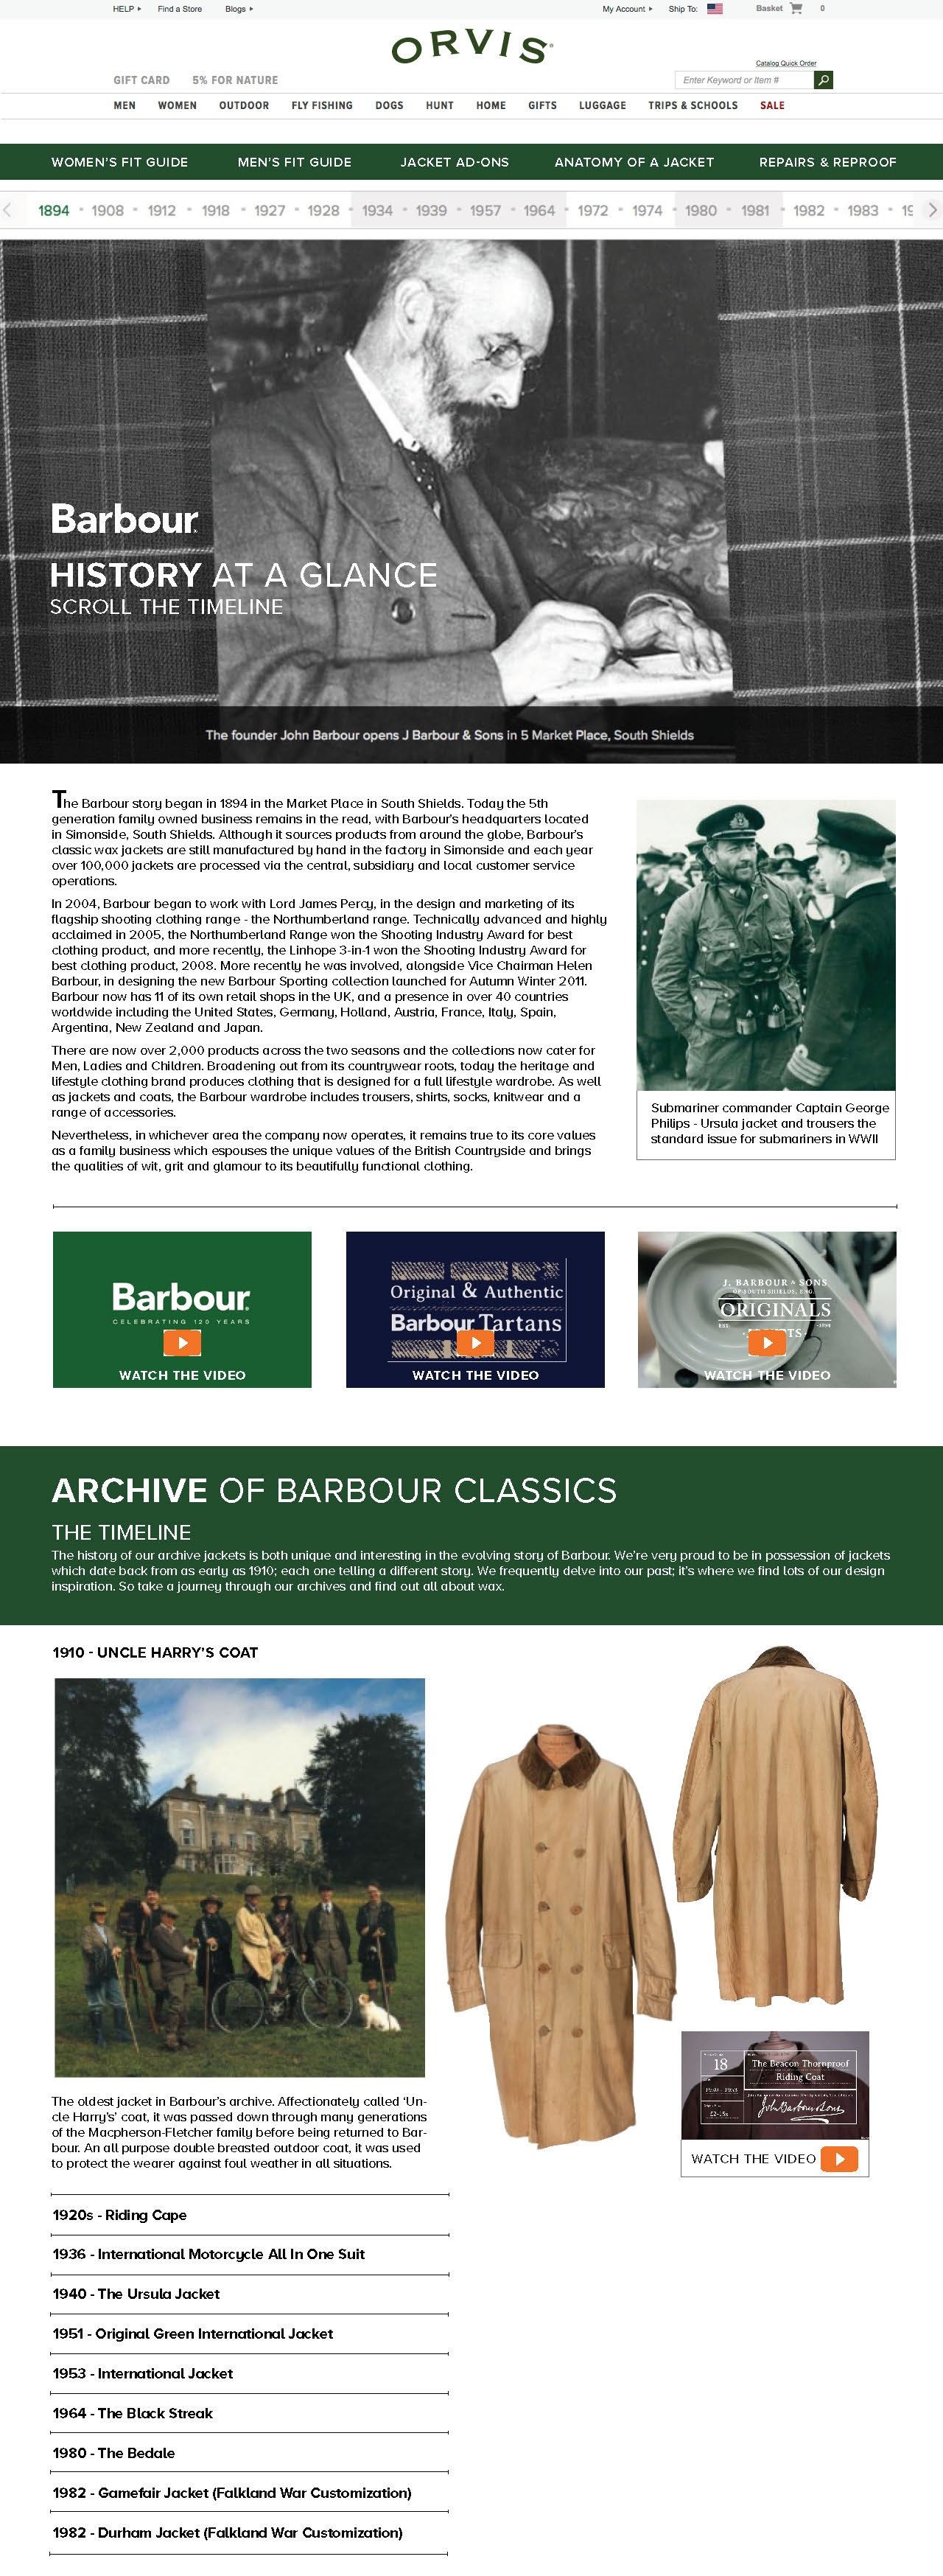 Barbour Guide_History_2.jpg